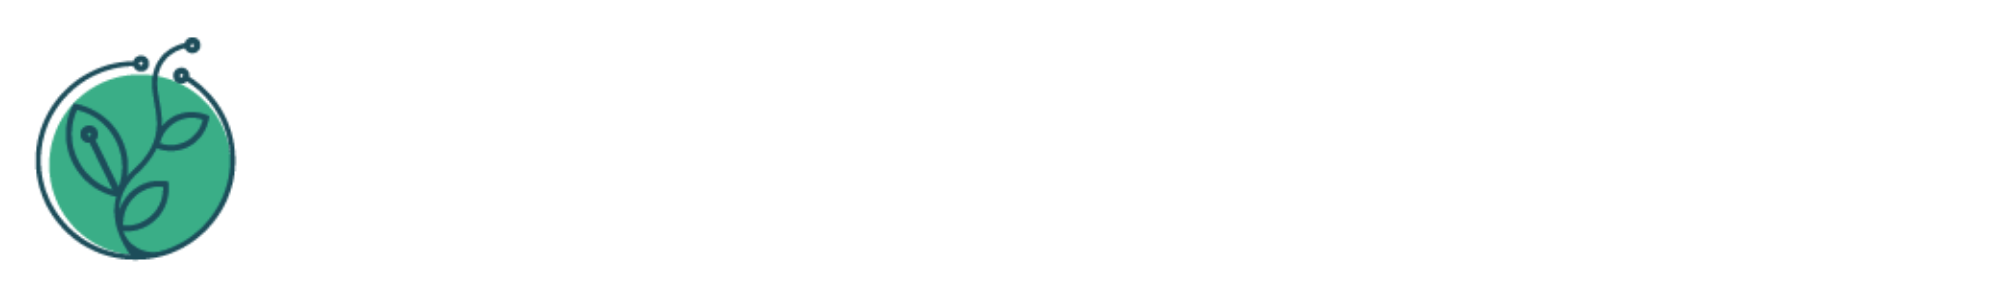 Good Food Finance Network